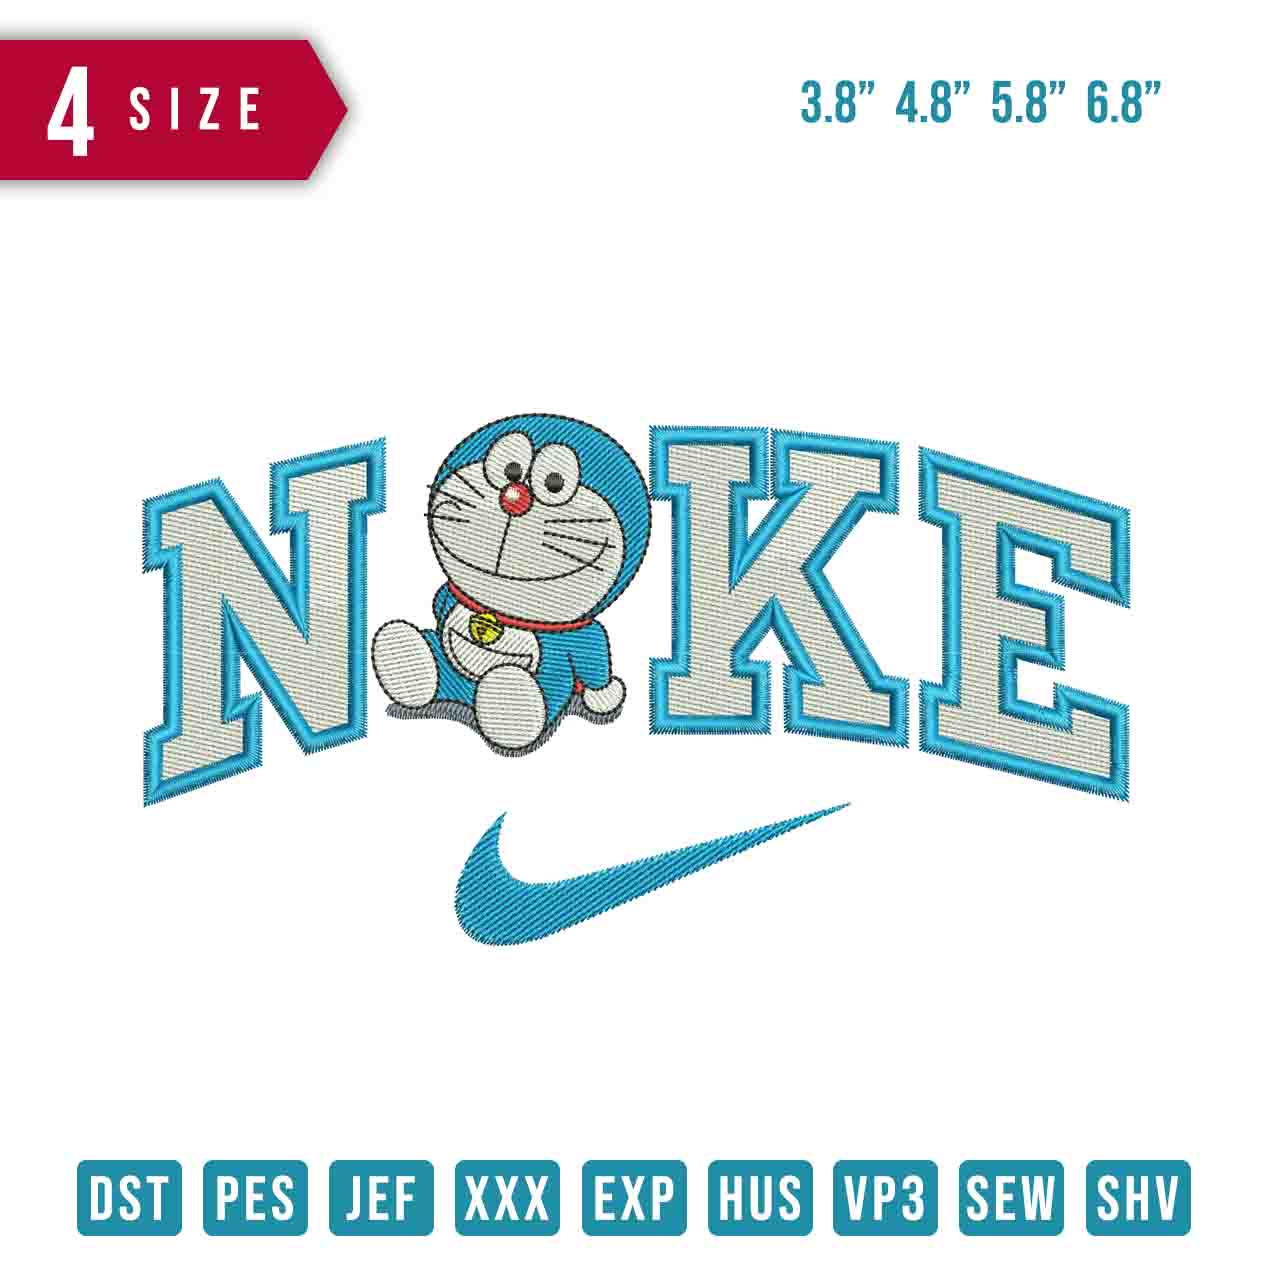 Nike Doraemon